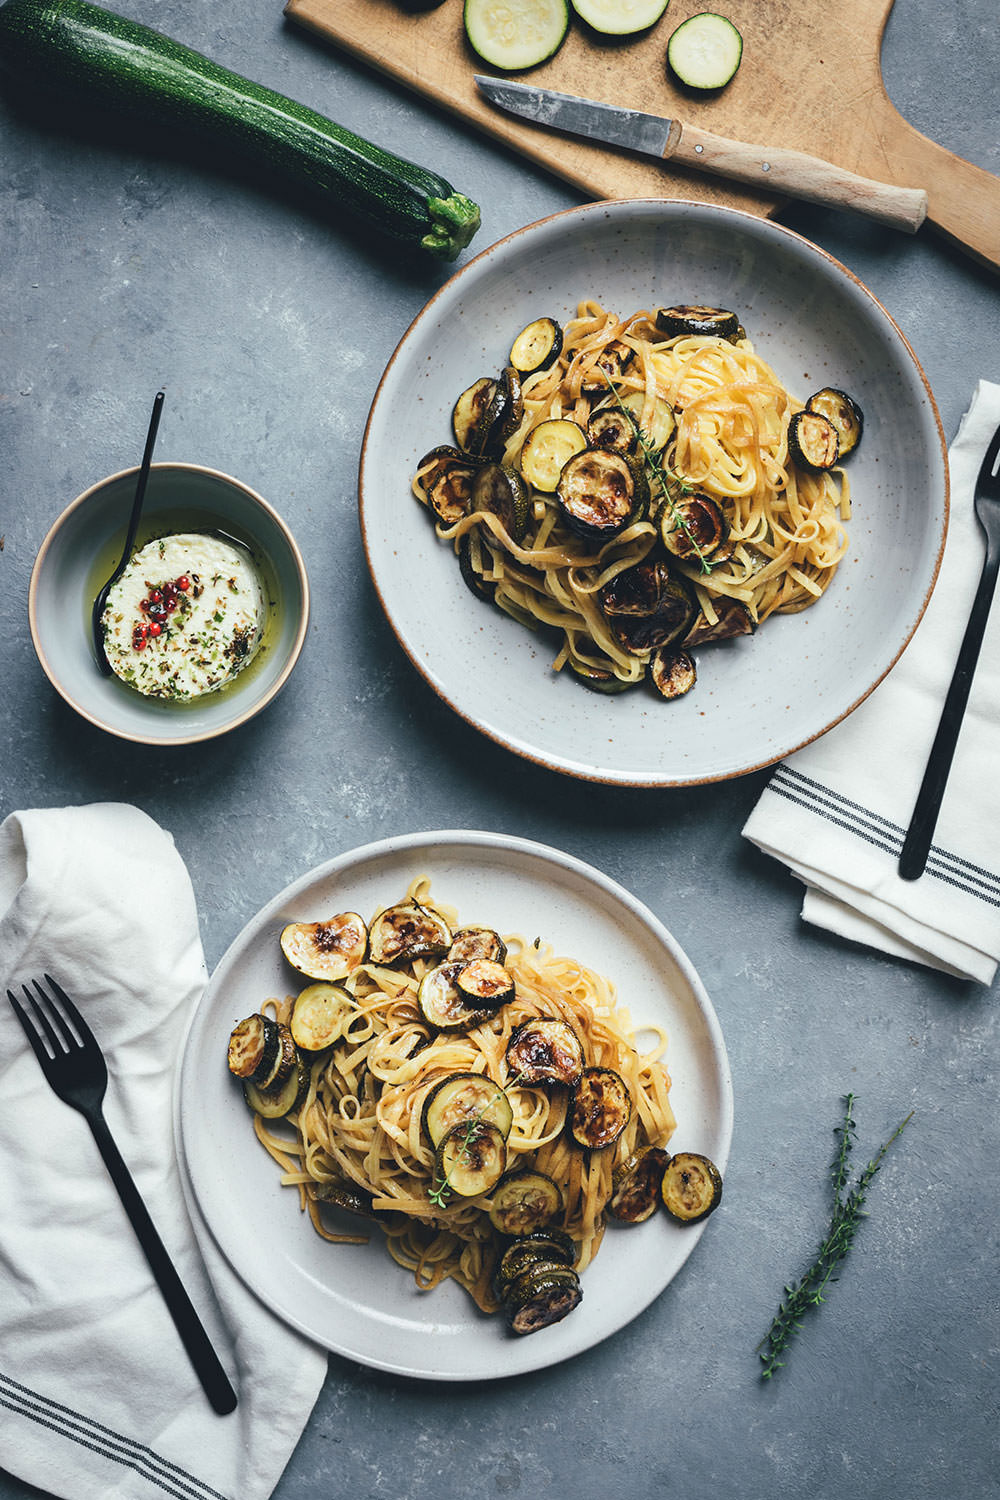 Rezept für Pasta und Ofen-Zucchini mit Aceto Balsamico di Modena g.g.A. (Werbung) | moeyskitchen.com #pasta #nudeln #spaghetti #fettuccine #balsamico #acetobalsamico #acetobalsamicodimodena #zucchini #courgette #sommer #foodblogger #rezepte